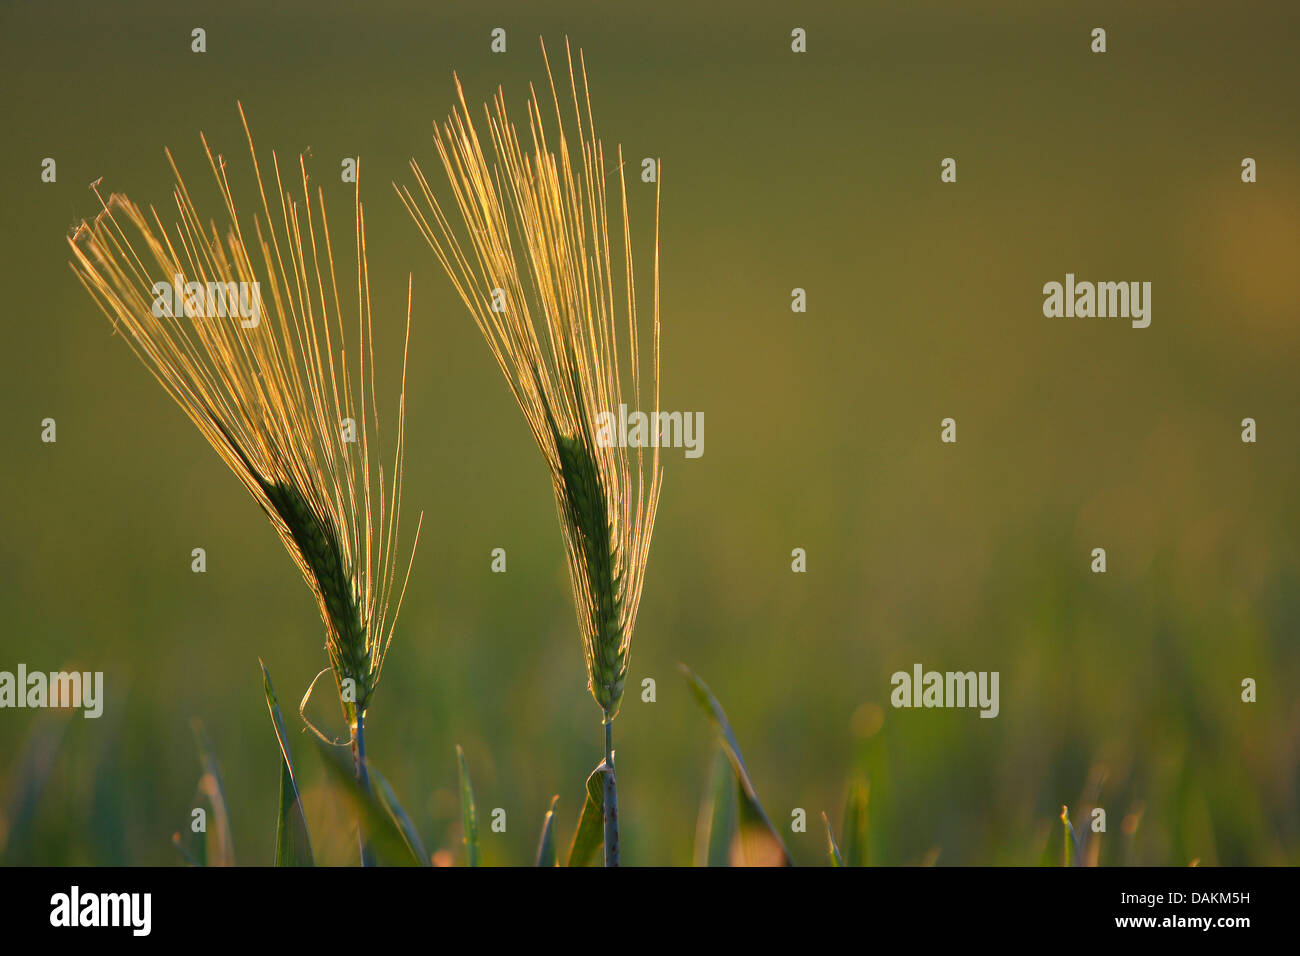 barley (Hordeum vulgare), two ears in backlight, Belgium Stock Photo